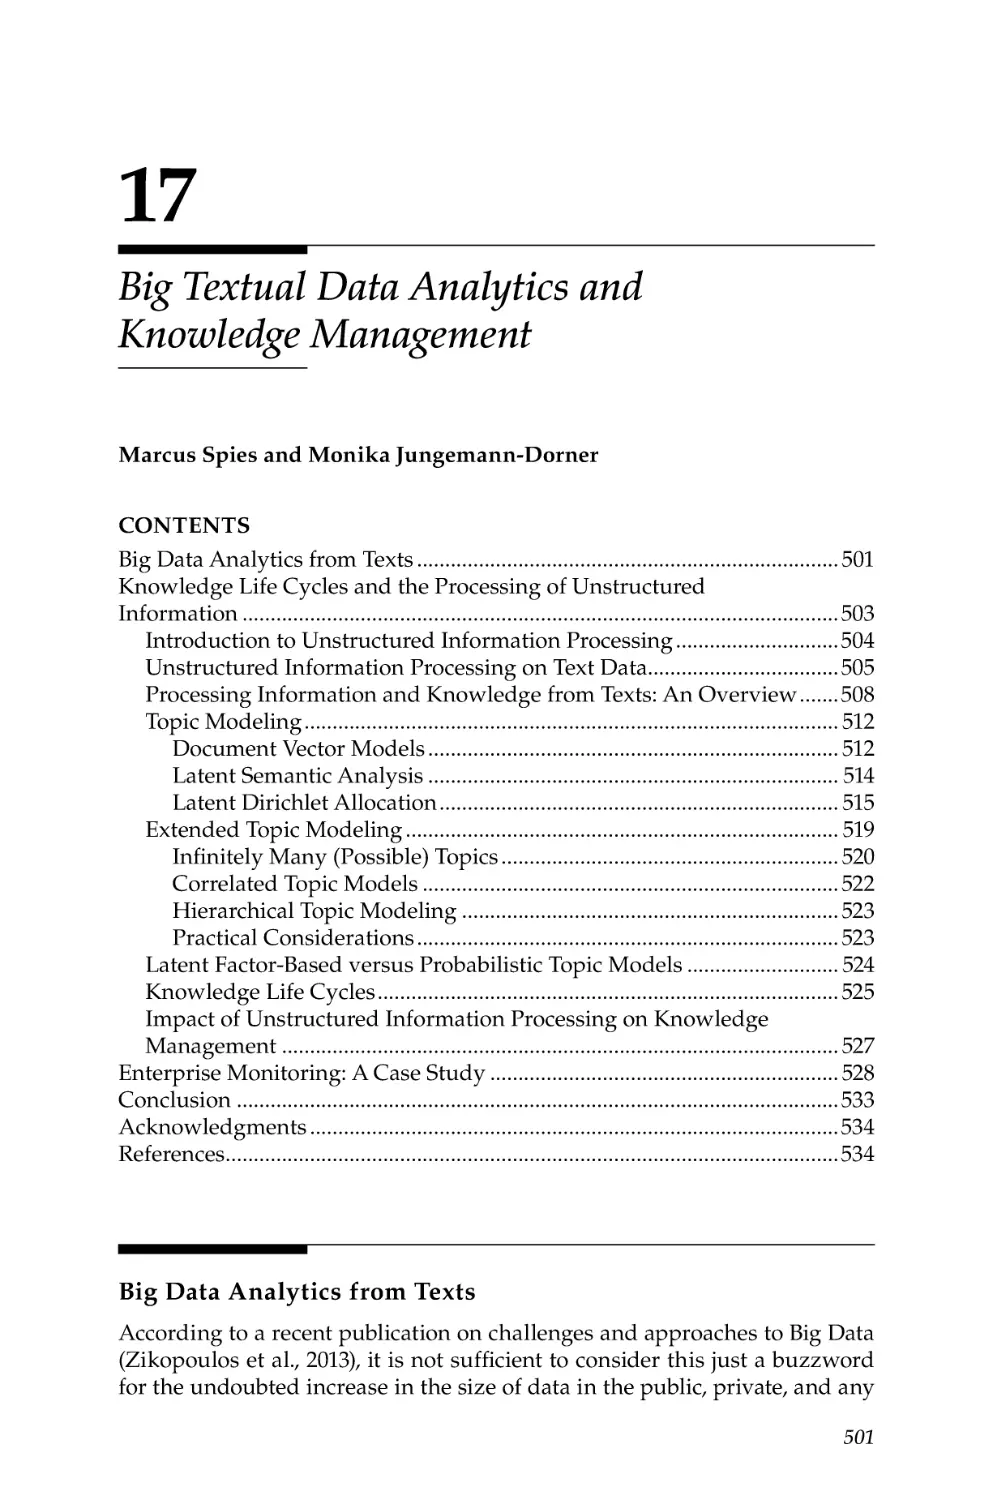 17. Big Textual Data Analytics and Knowledge Management